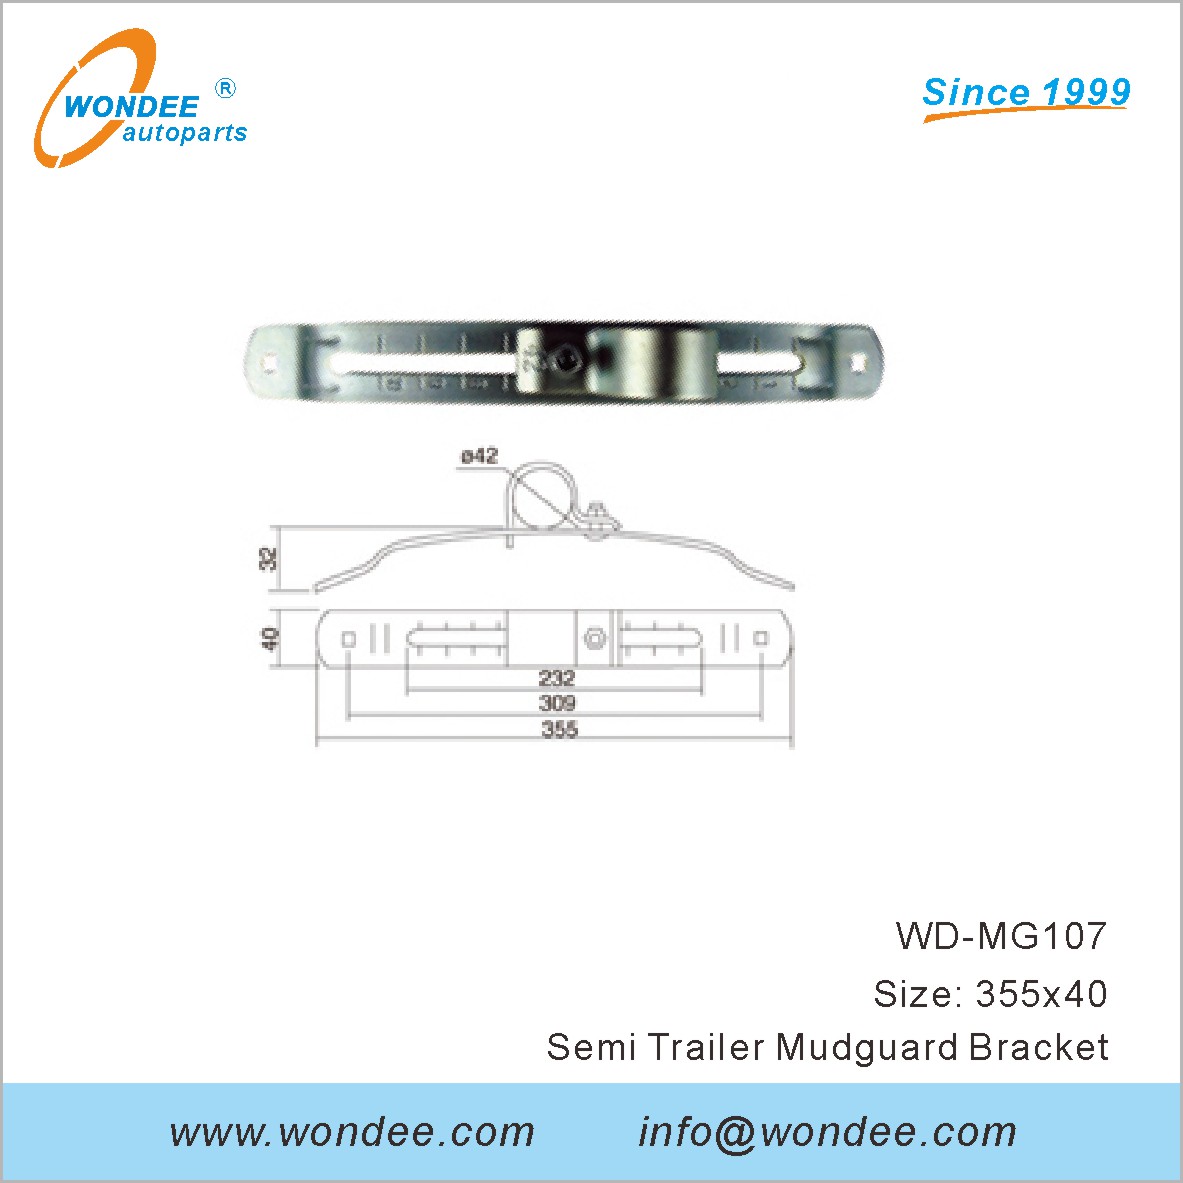 Mudguard bracket from WONDEE Autoparts (7)